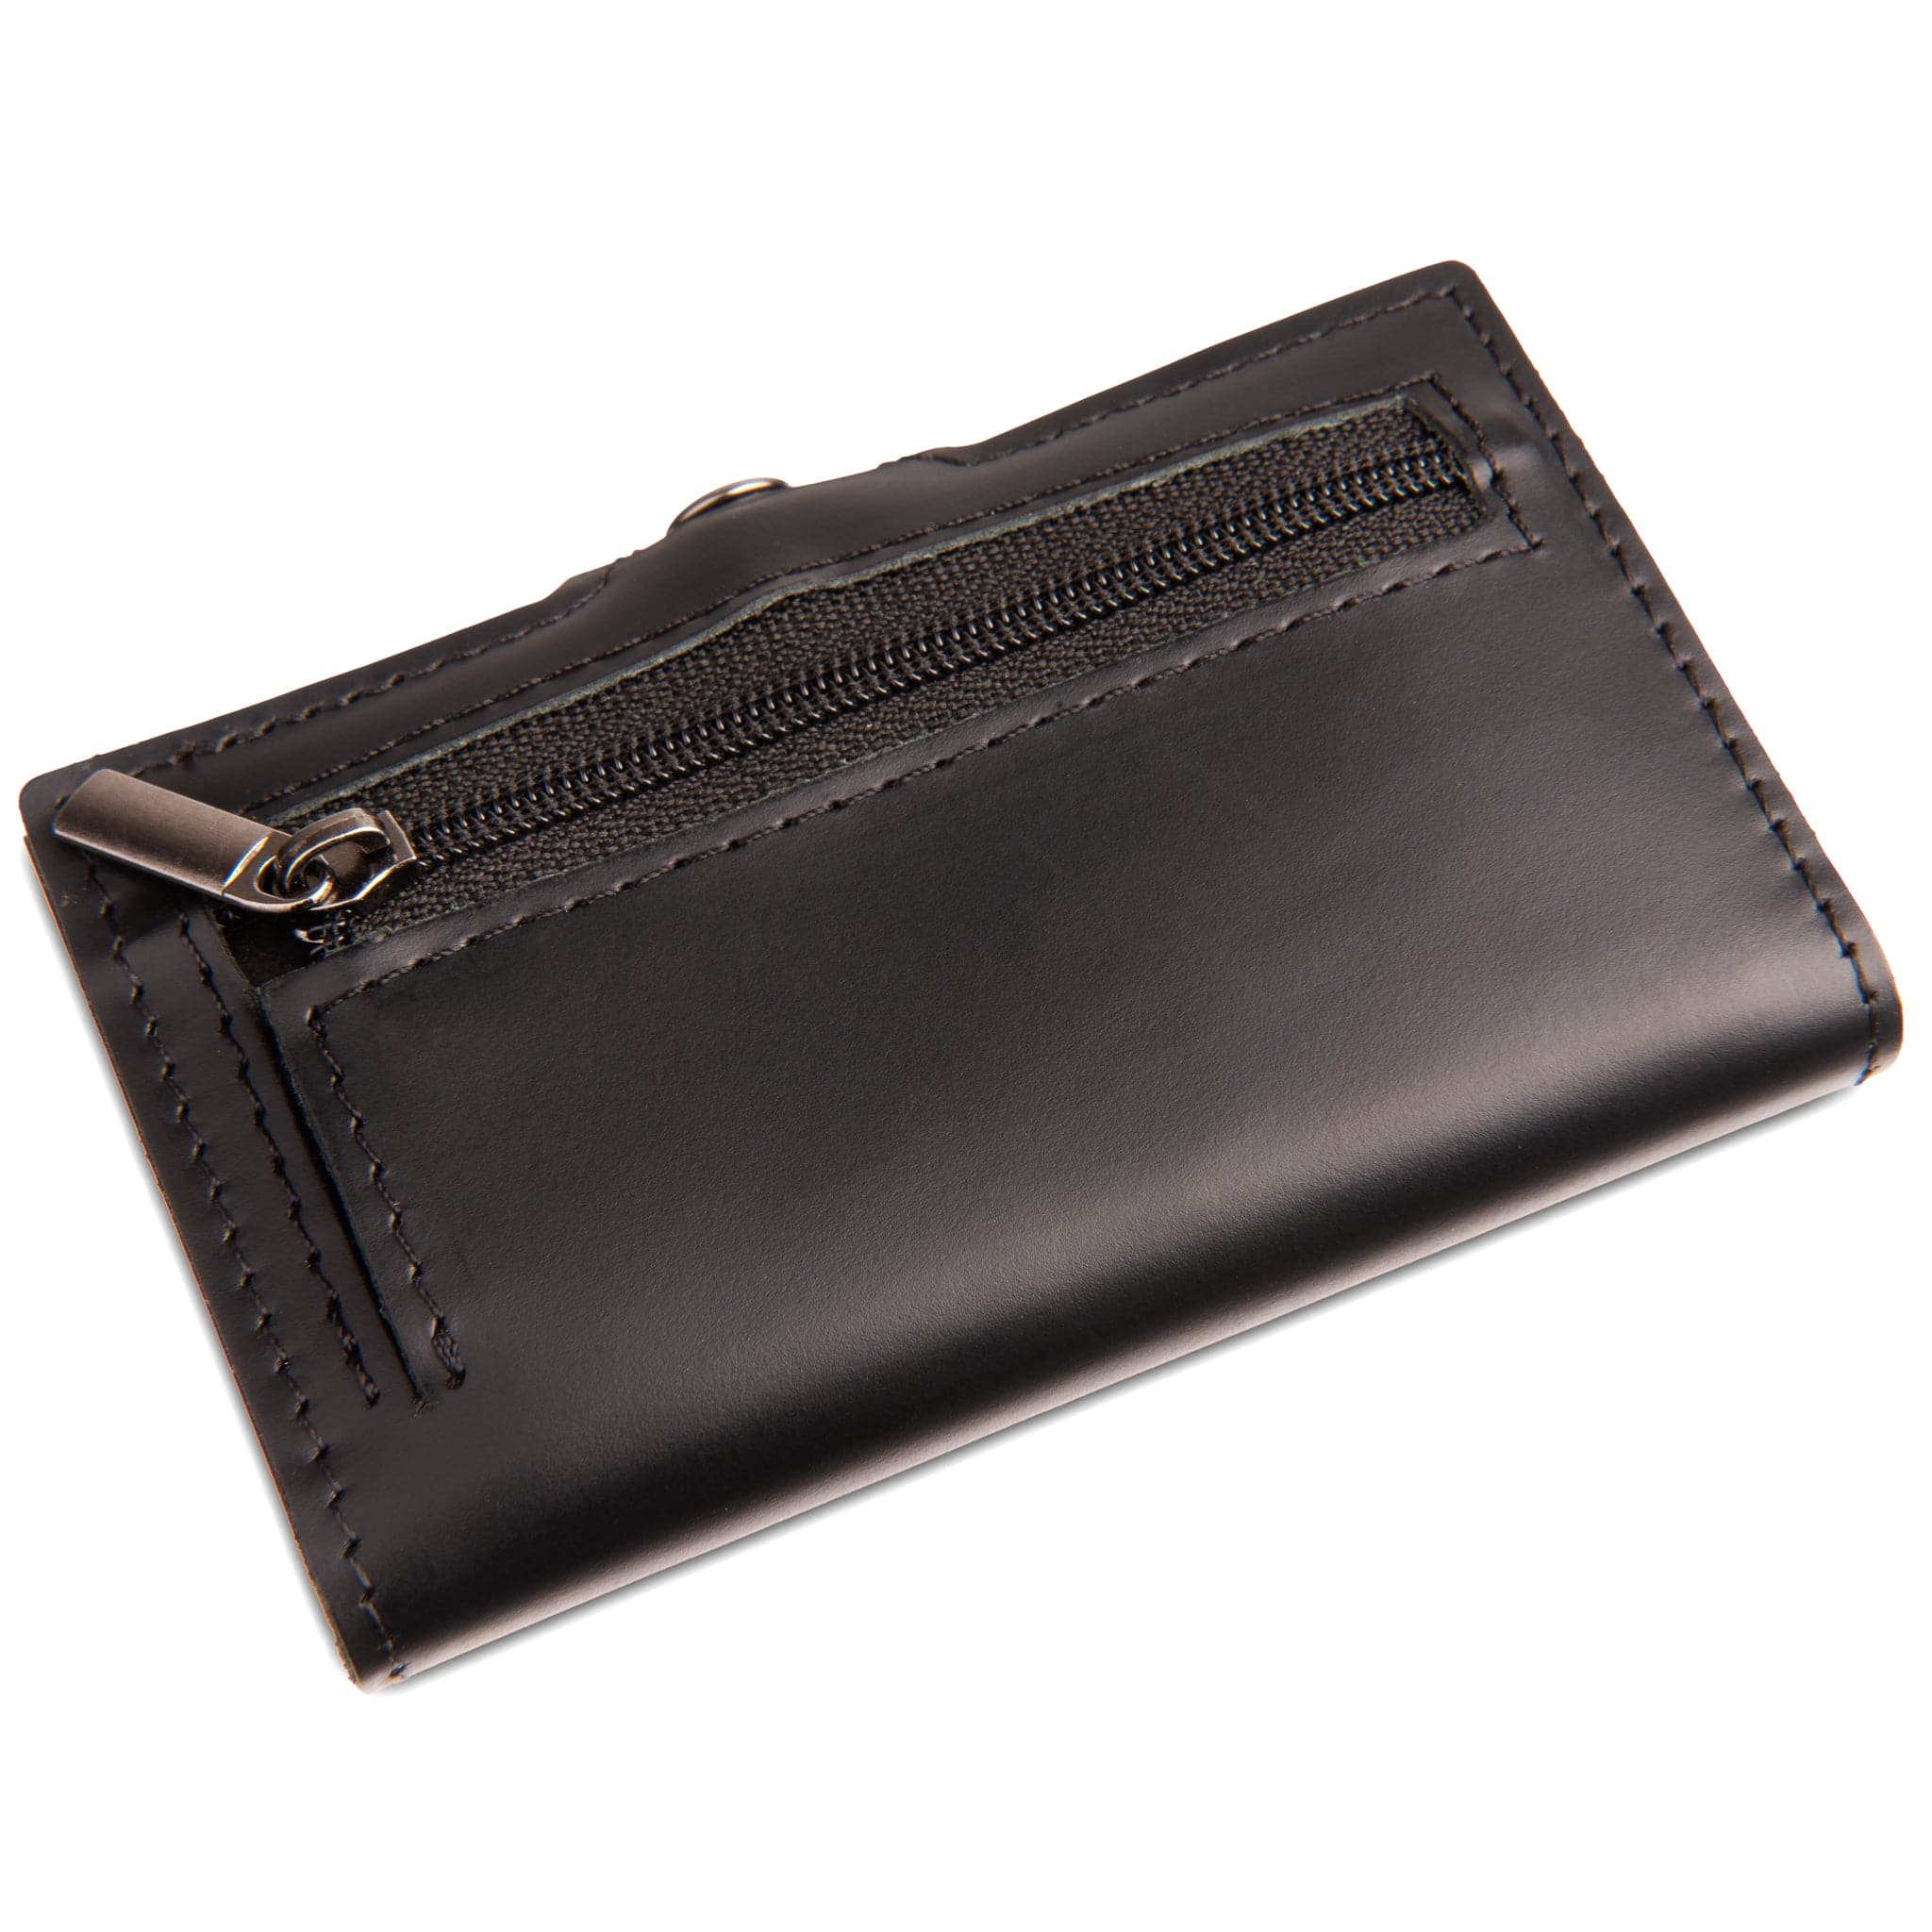 ST. LOUIS CARDINALS Leather BiFold Wallet NEW black 2 sb